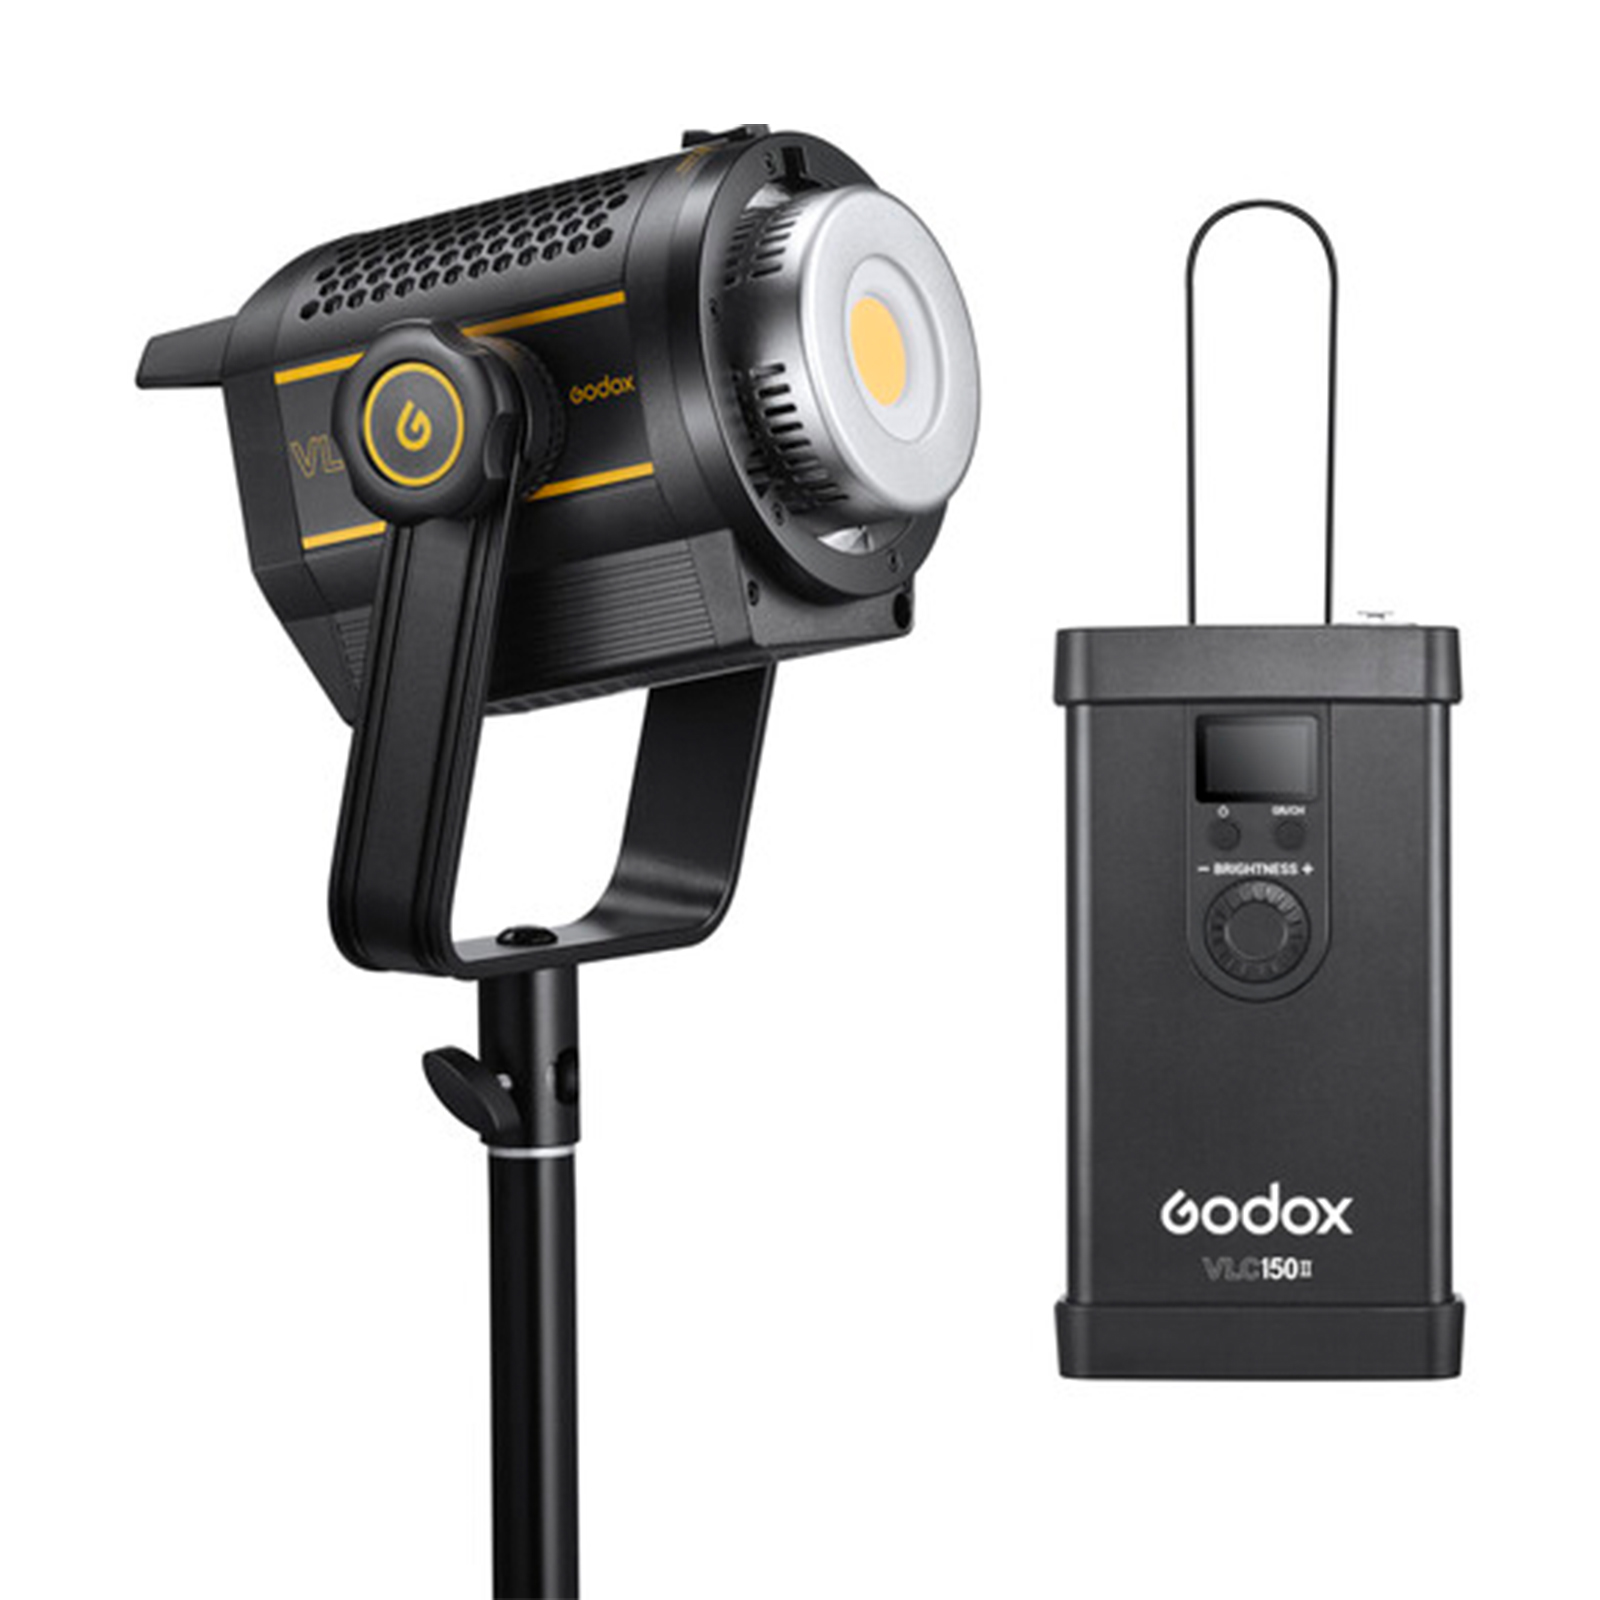 Image of Godox Vl150II LED Video Light